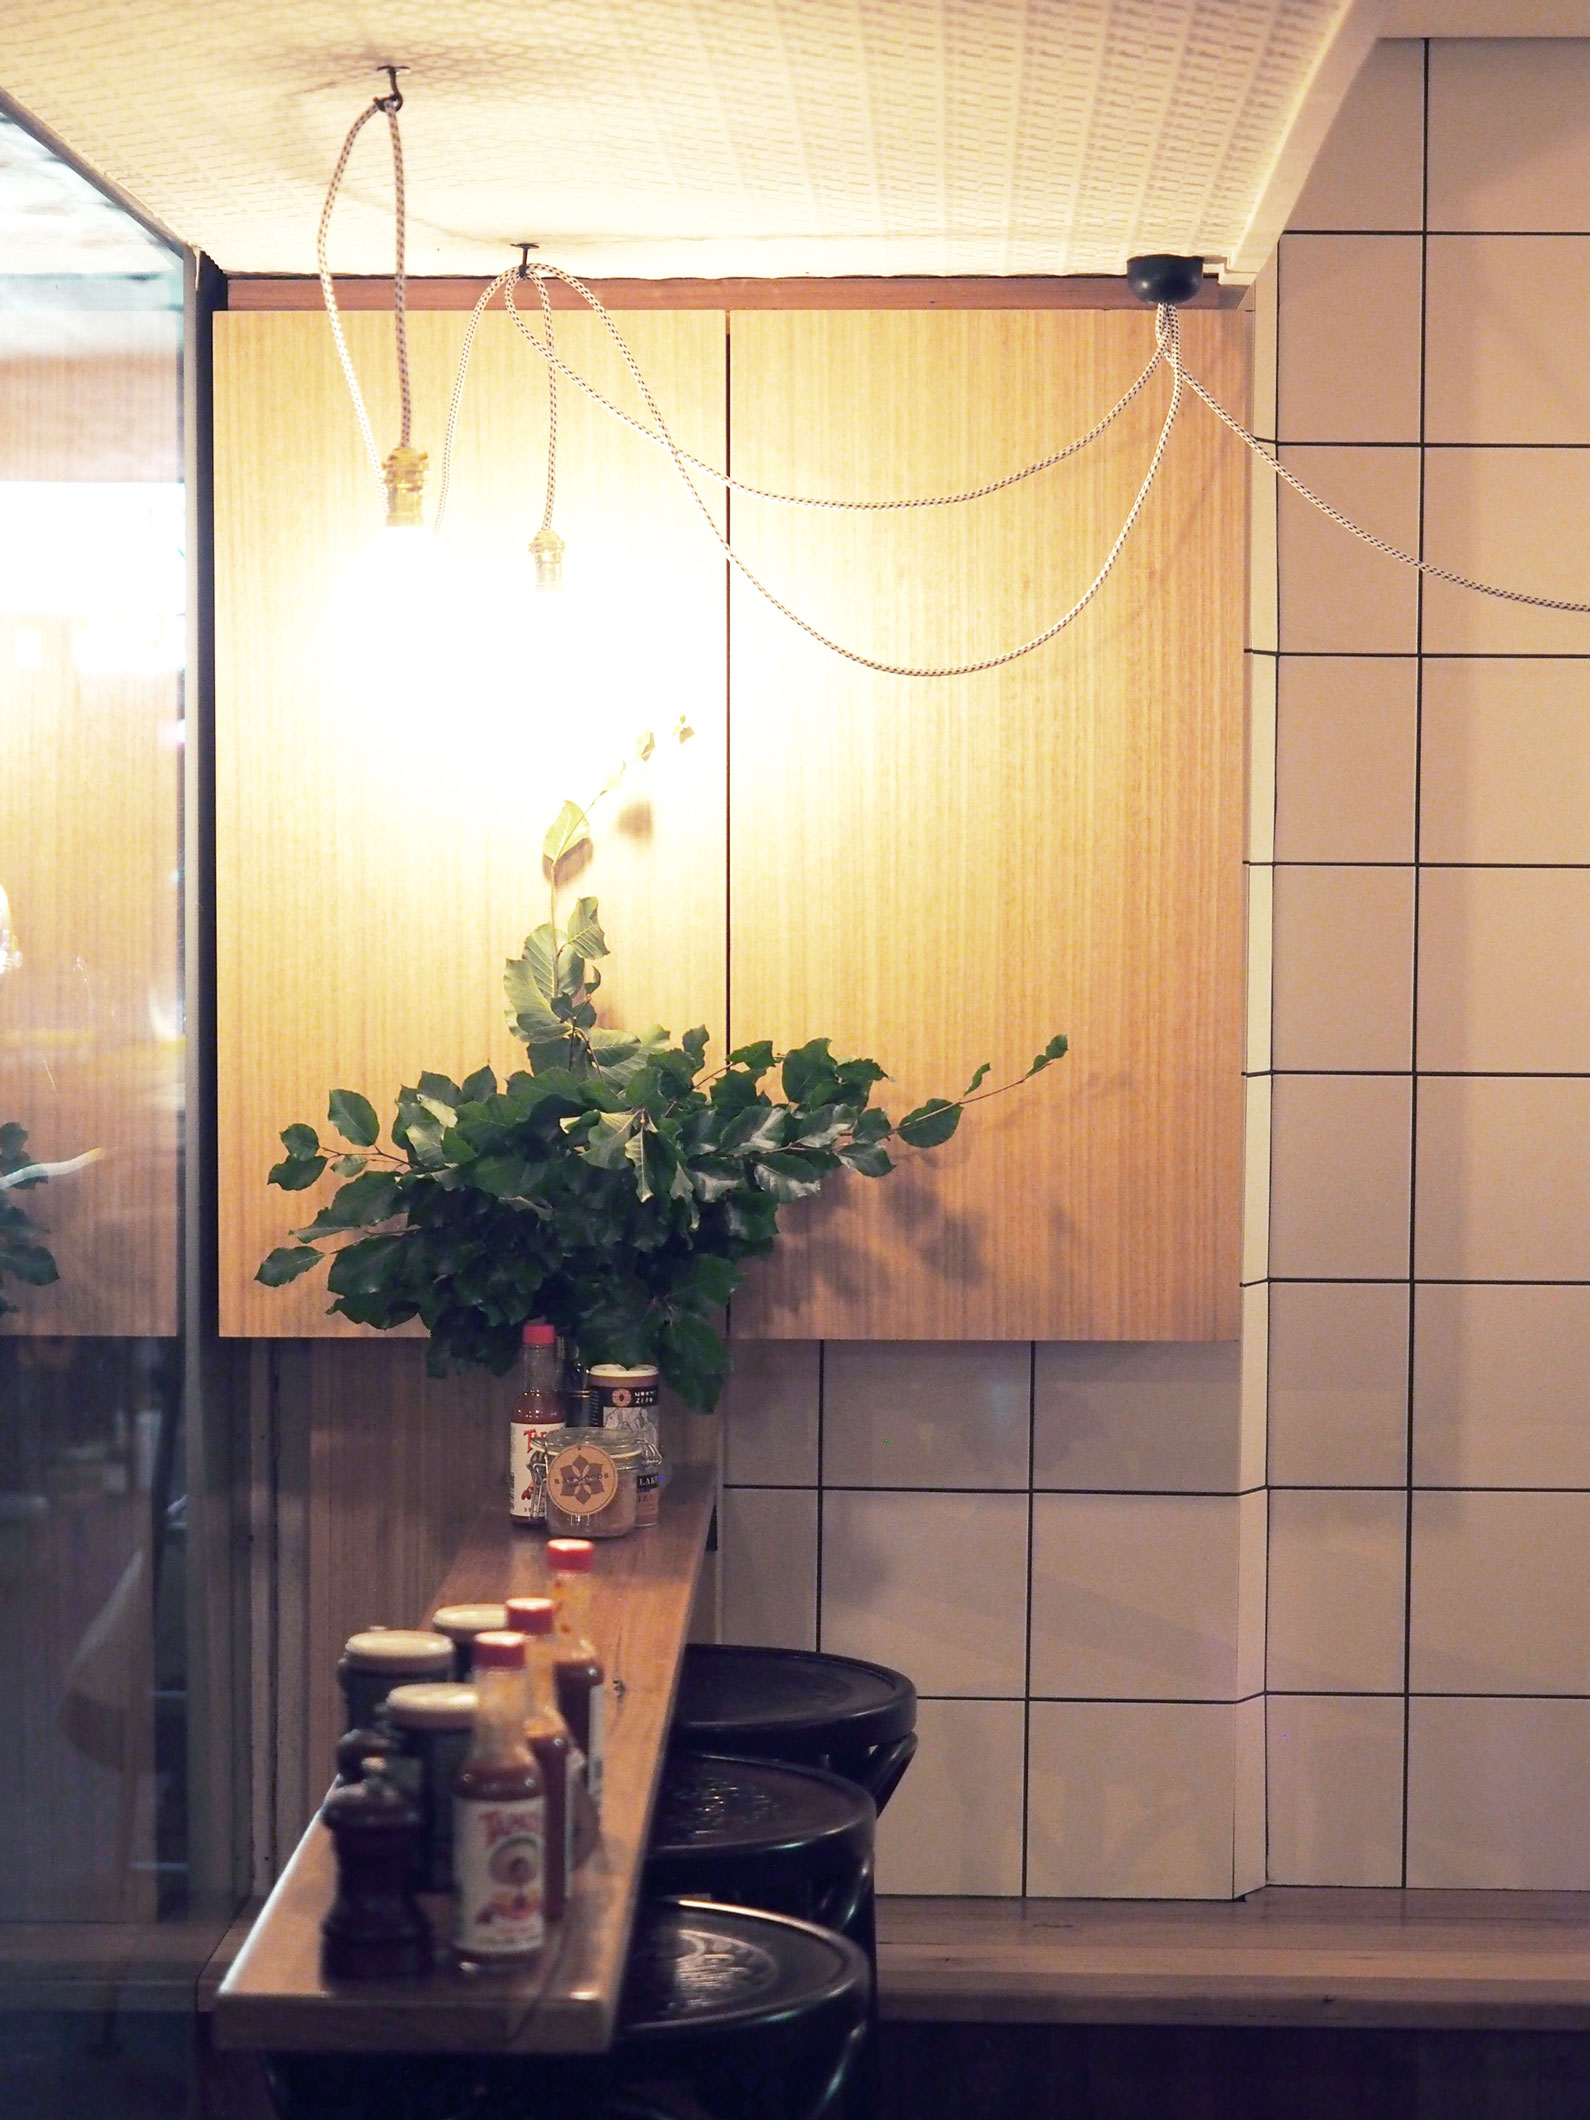 Studio-Mimi-Moon-Hard-Pressed-Cafe-Identity-design,-signage-and-interior-styling-menu-7